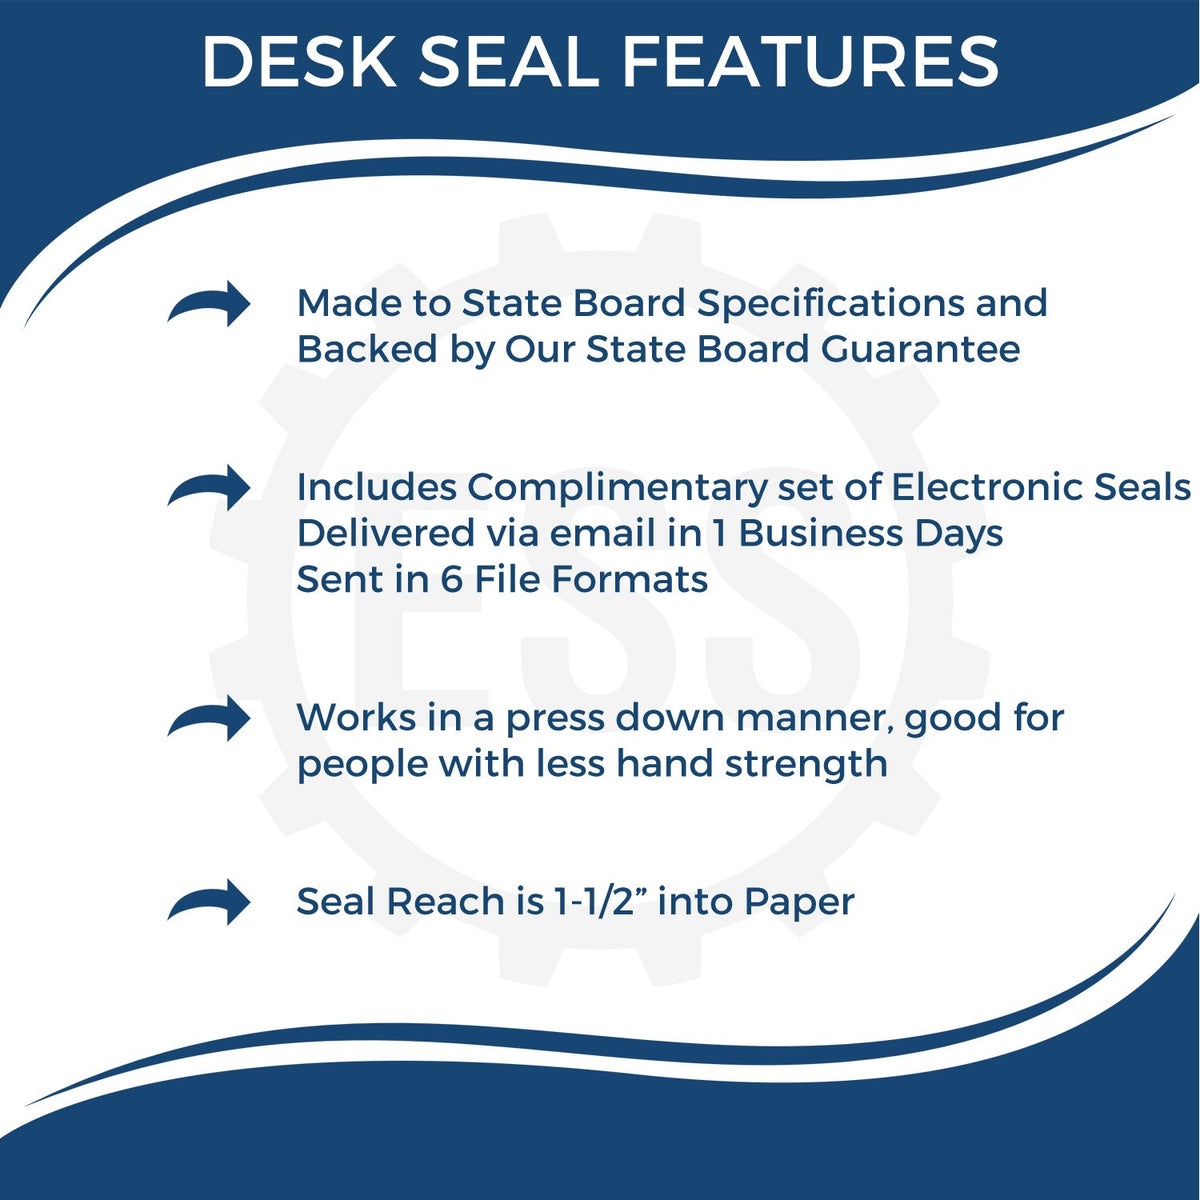 Delaware Engineer Desk Seal